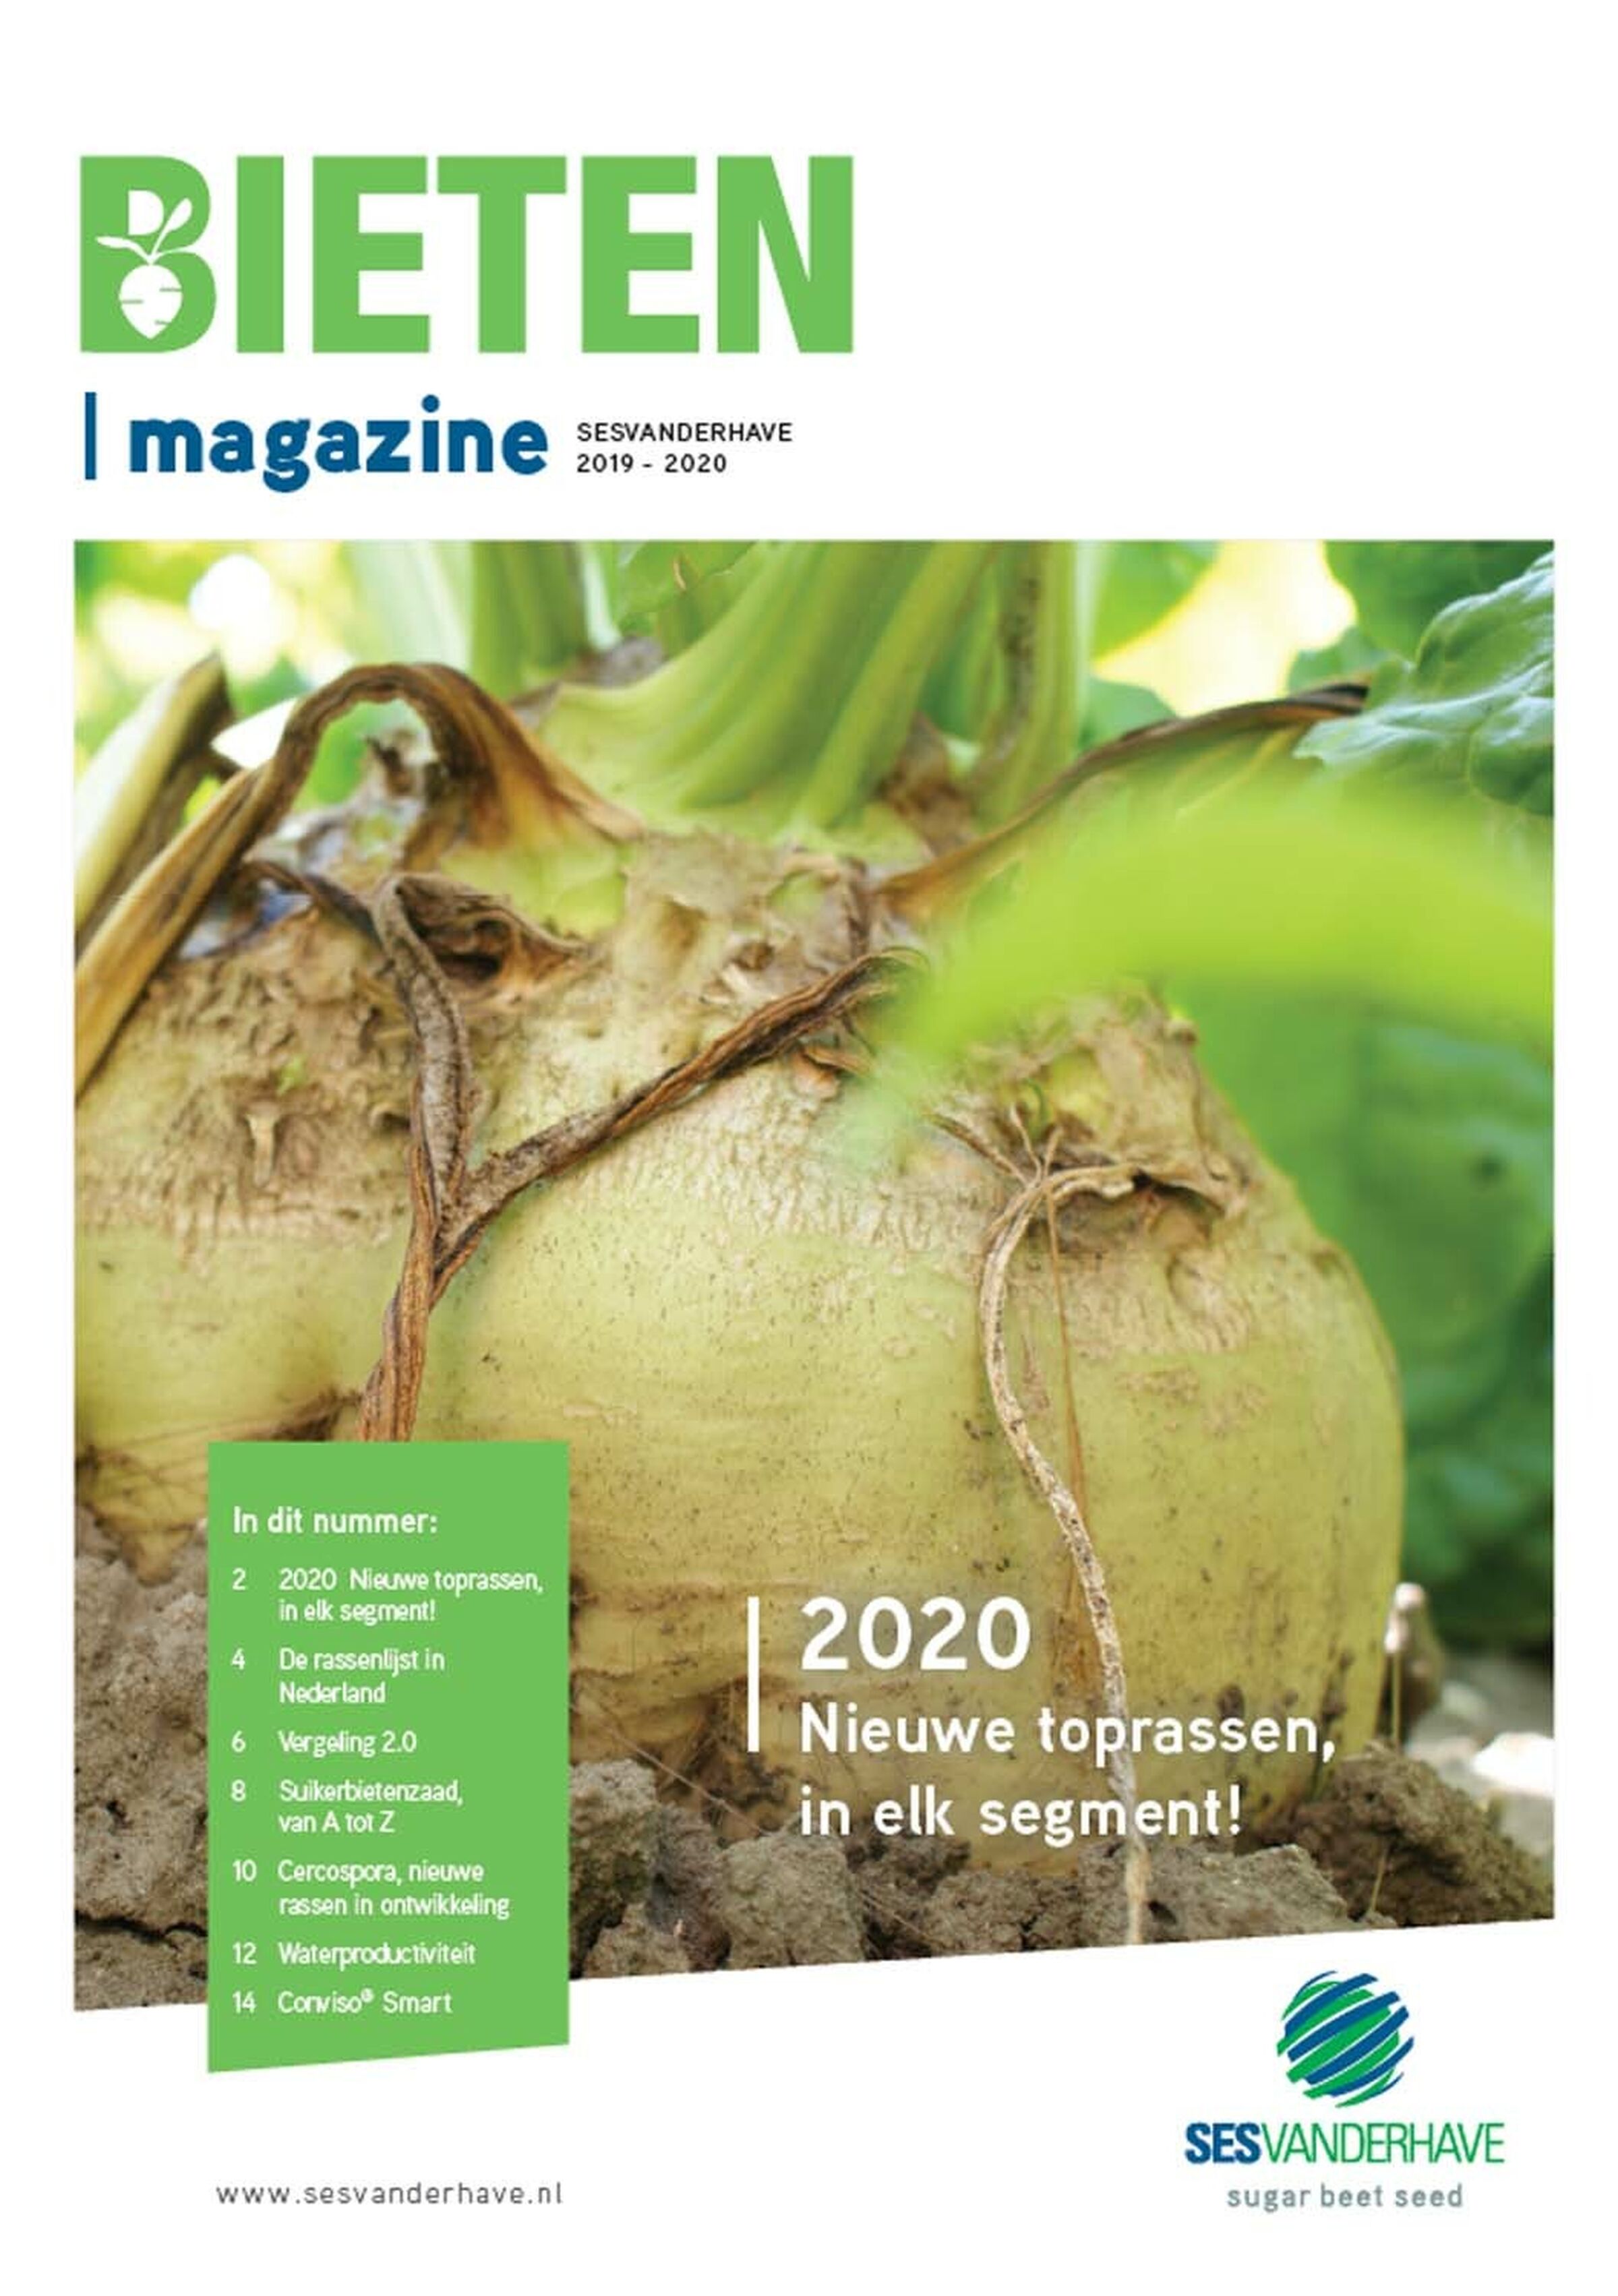 Sesvanderhave nederland news bietenmagazine 2019 2020